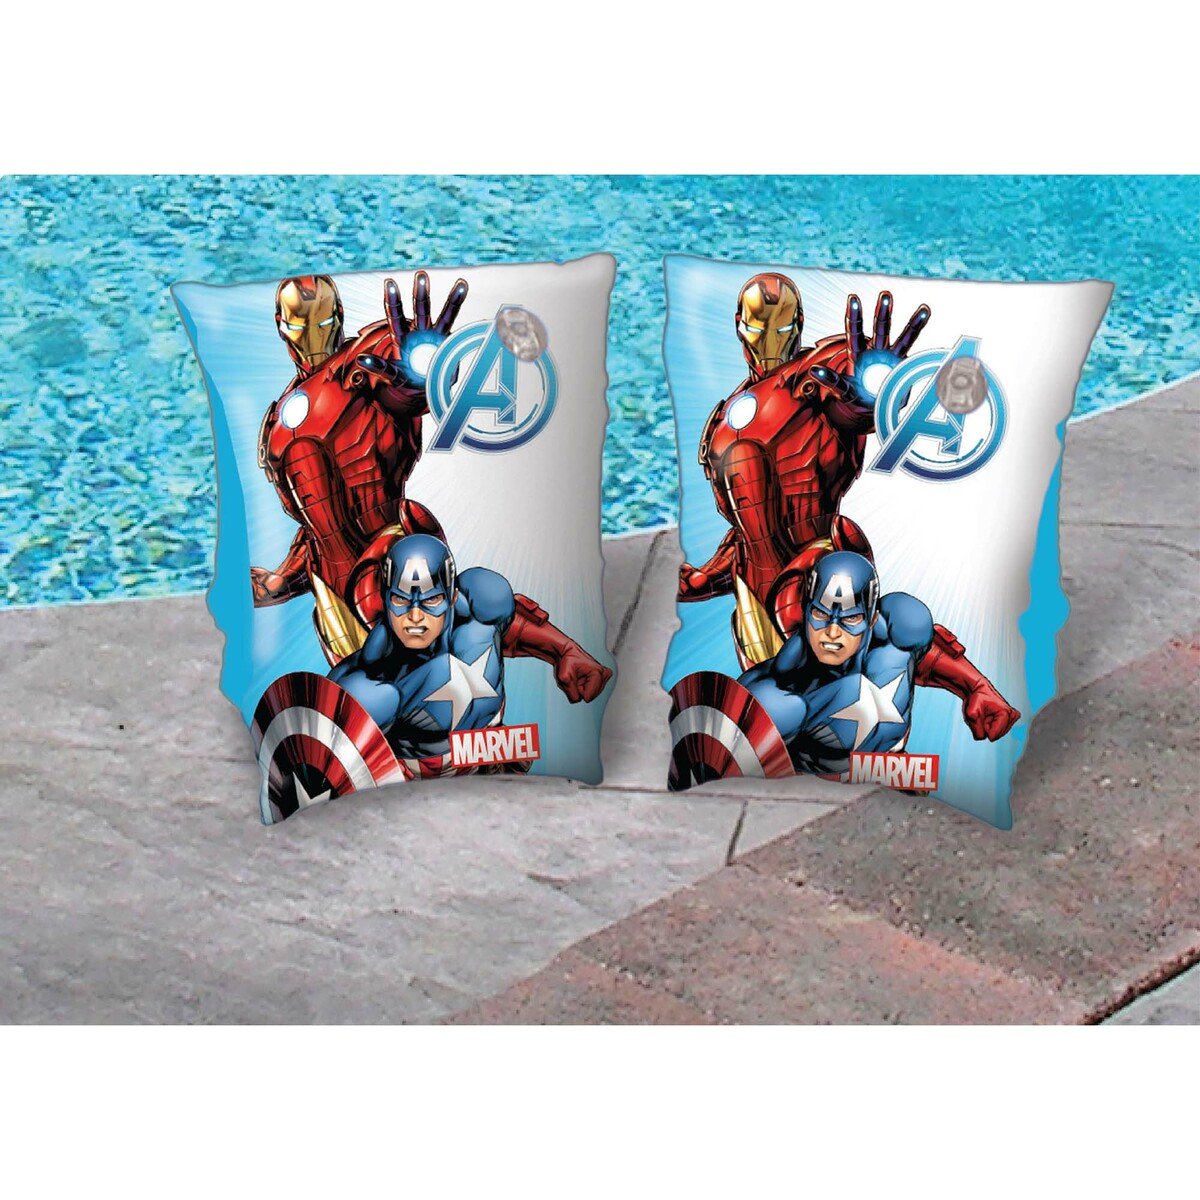 Avengers Printed Kids Inflatable Swim Arm Bands - Multi Color  TRHA5975